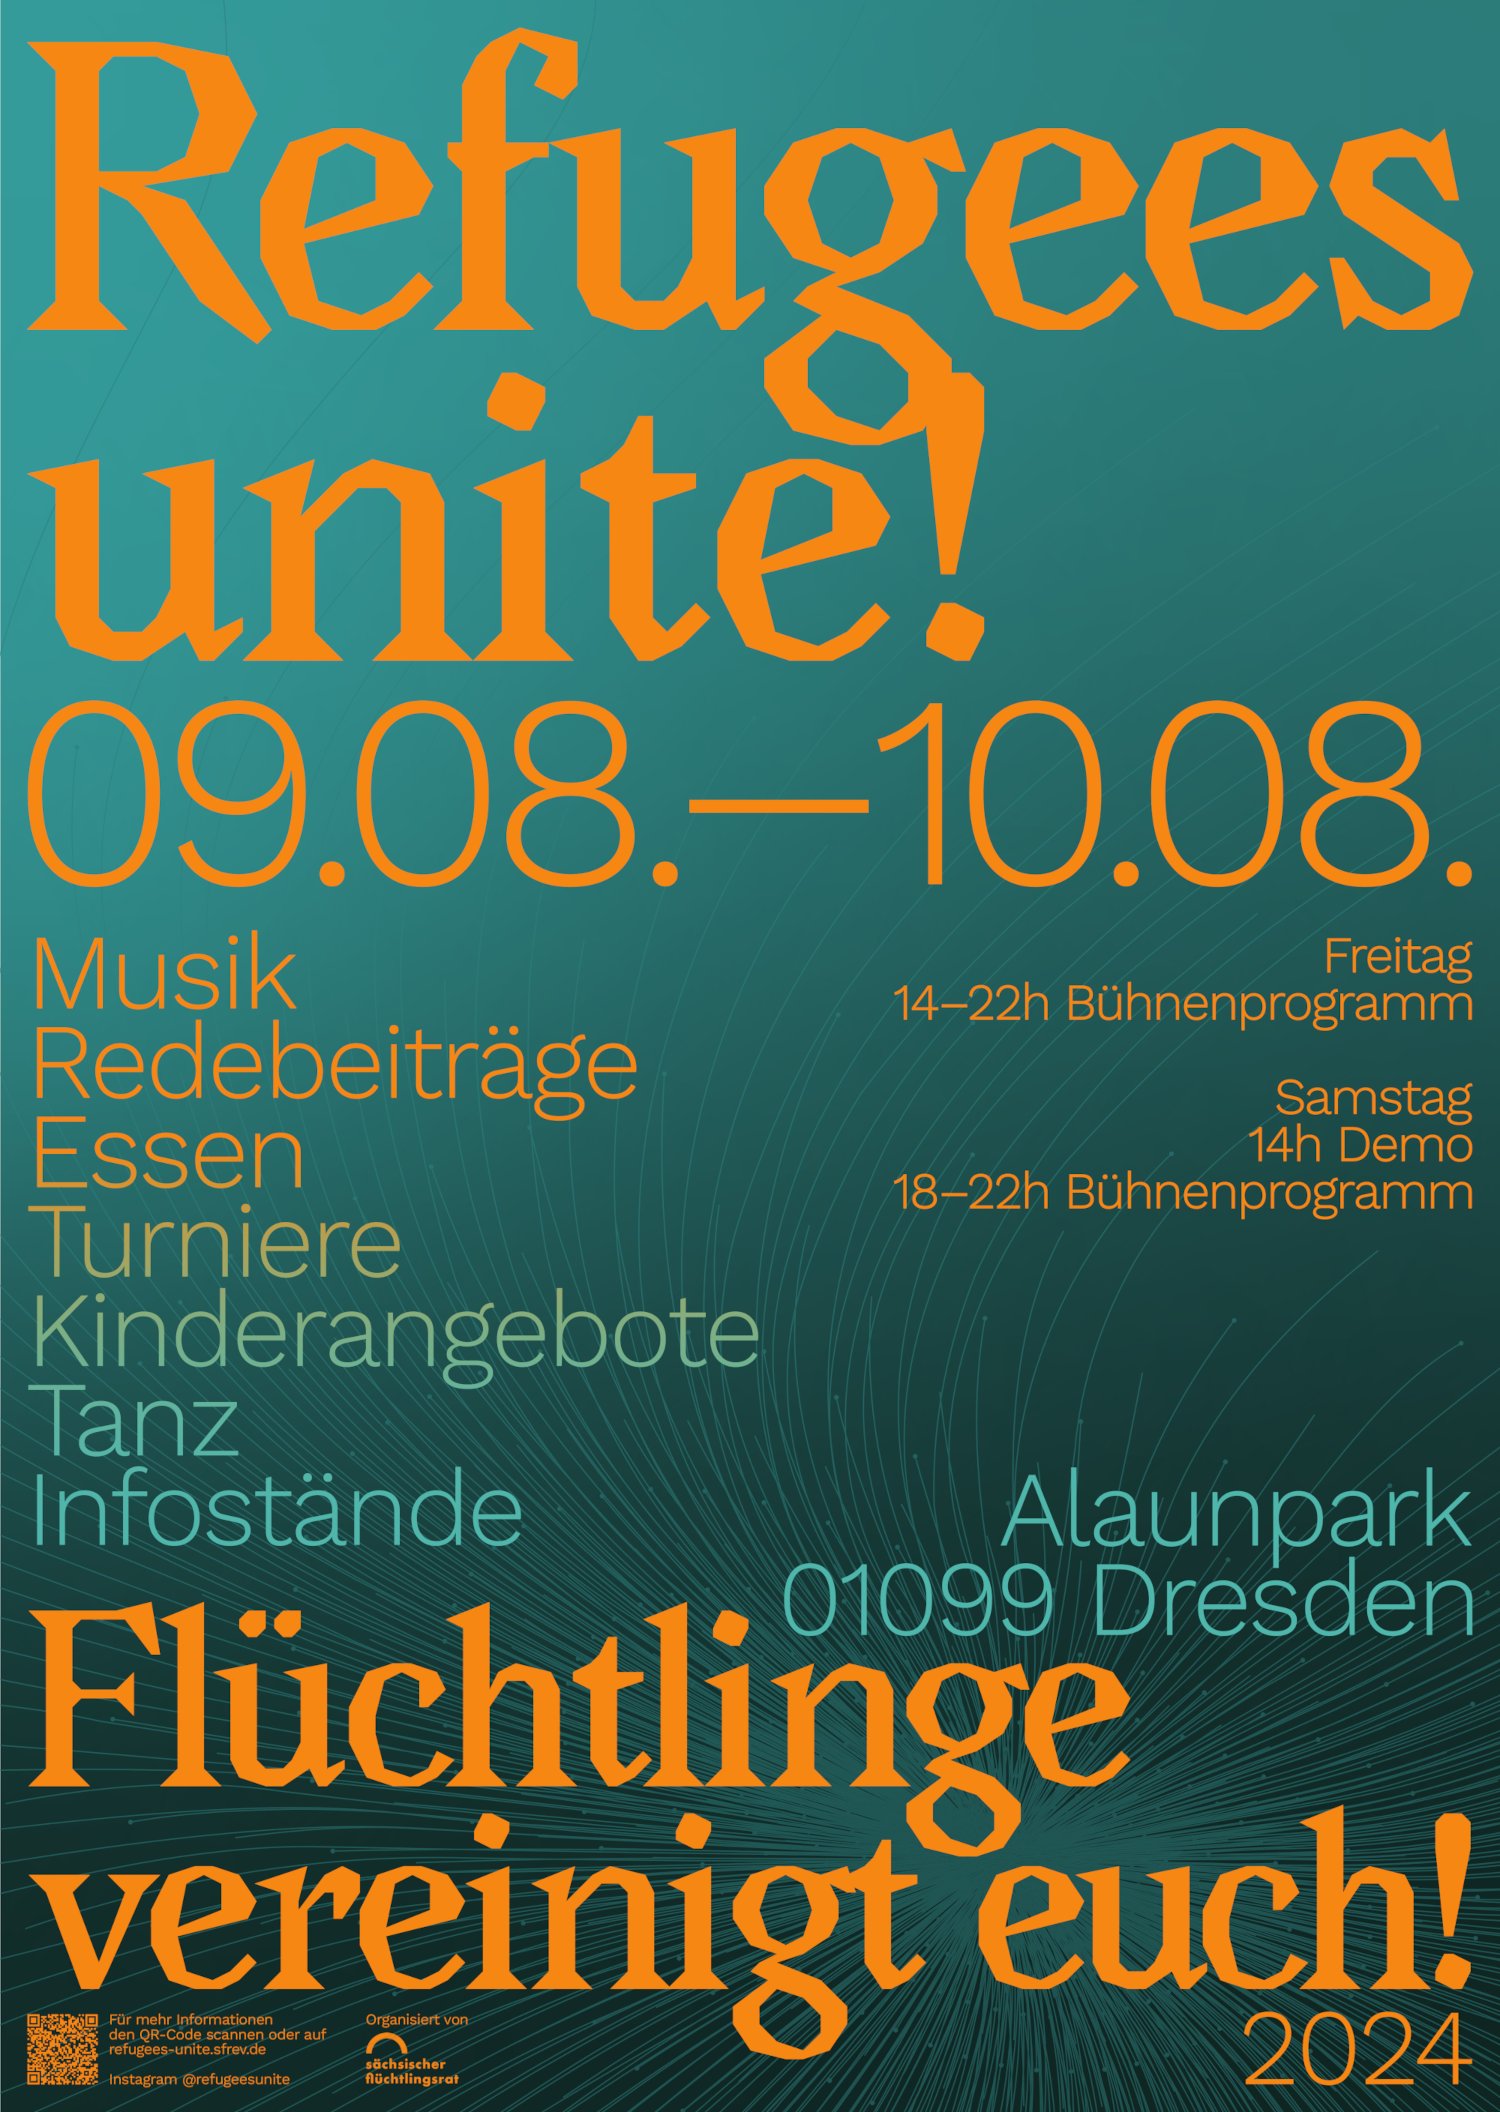 Fest & Demonstration: Refugees unite!